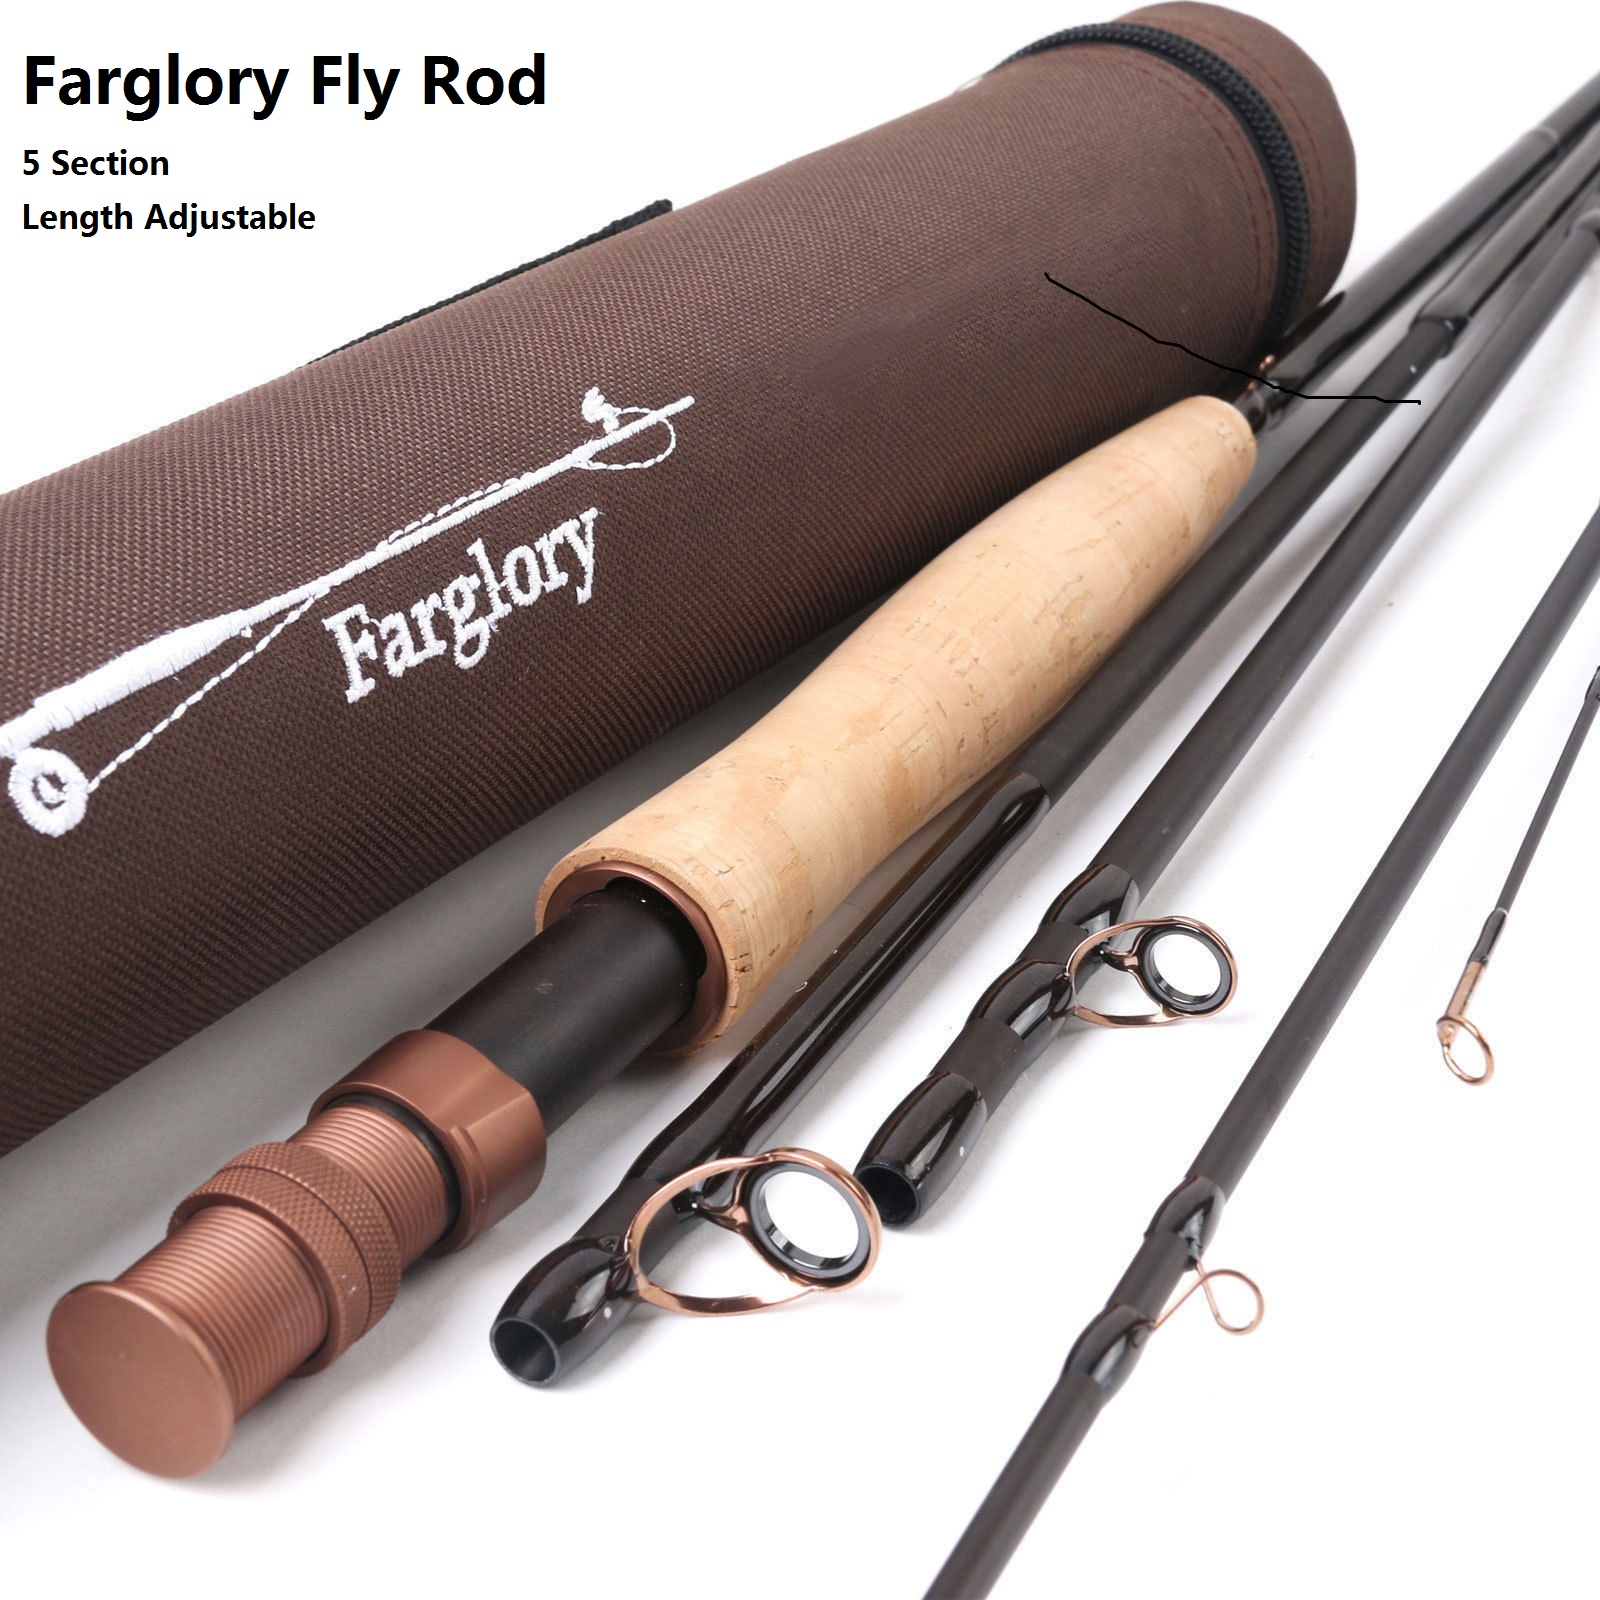 Farglory fly rod